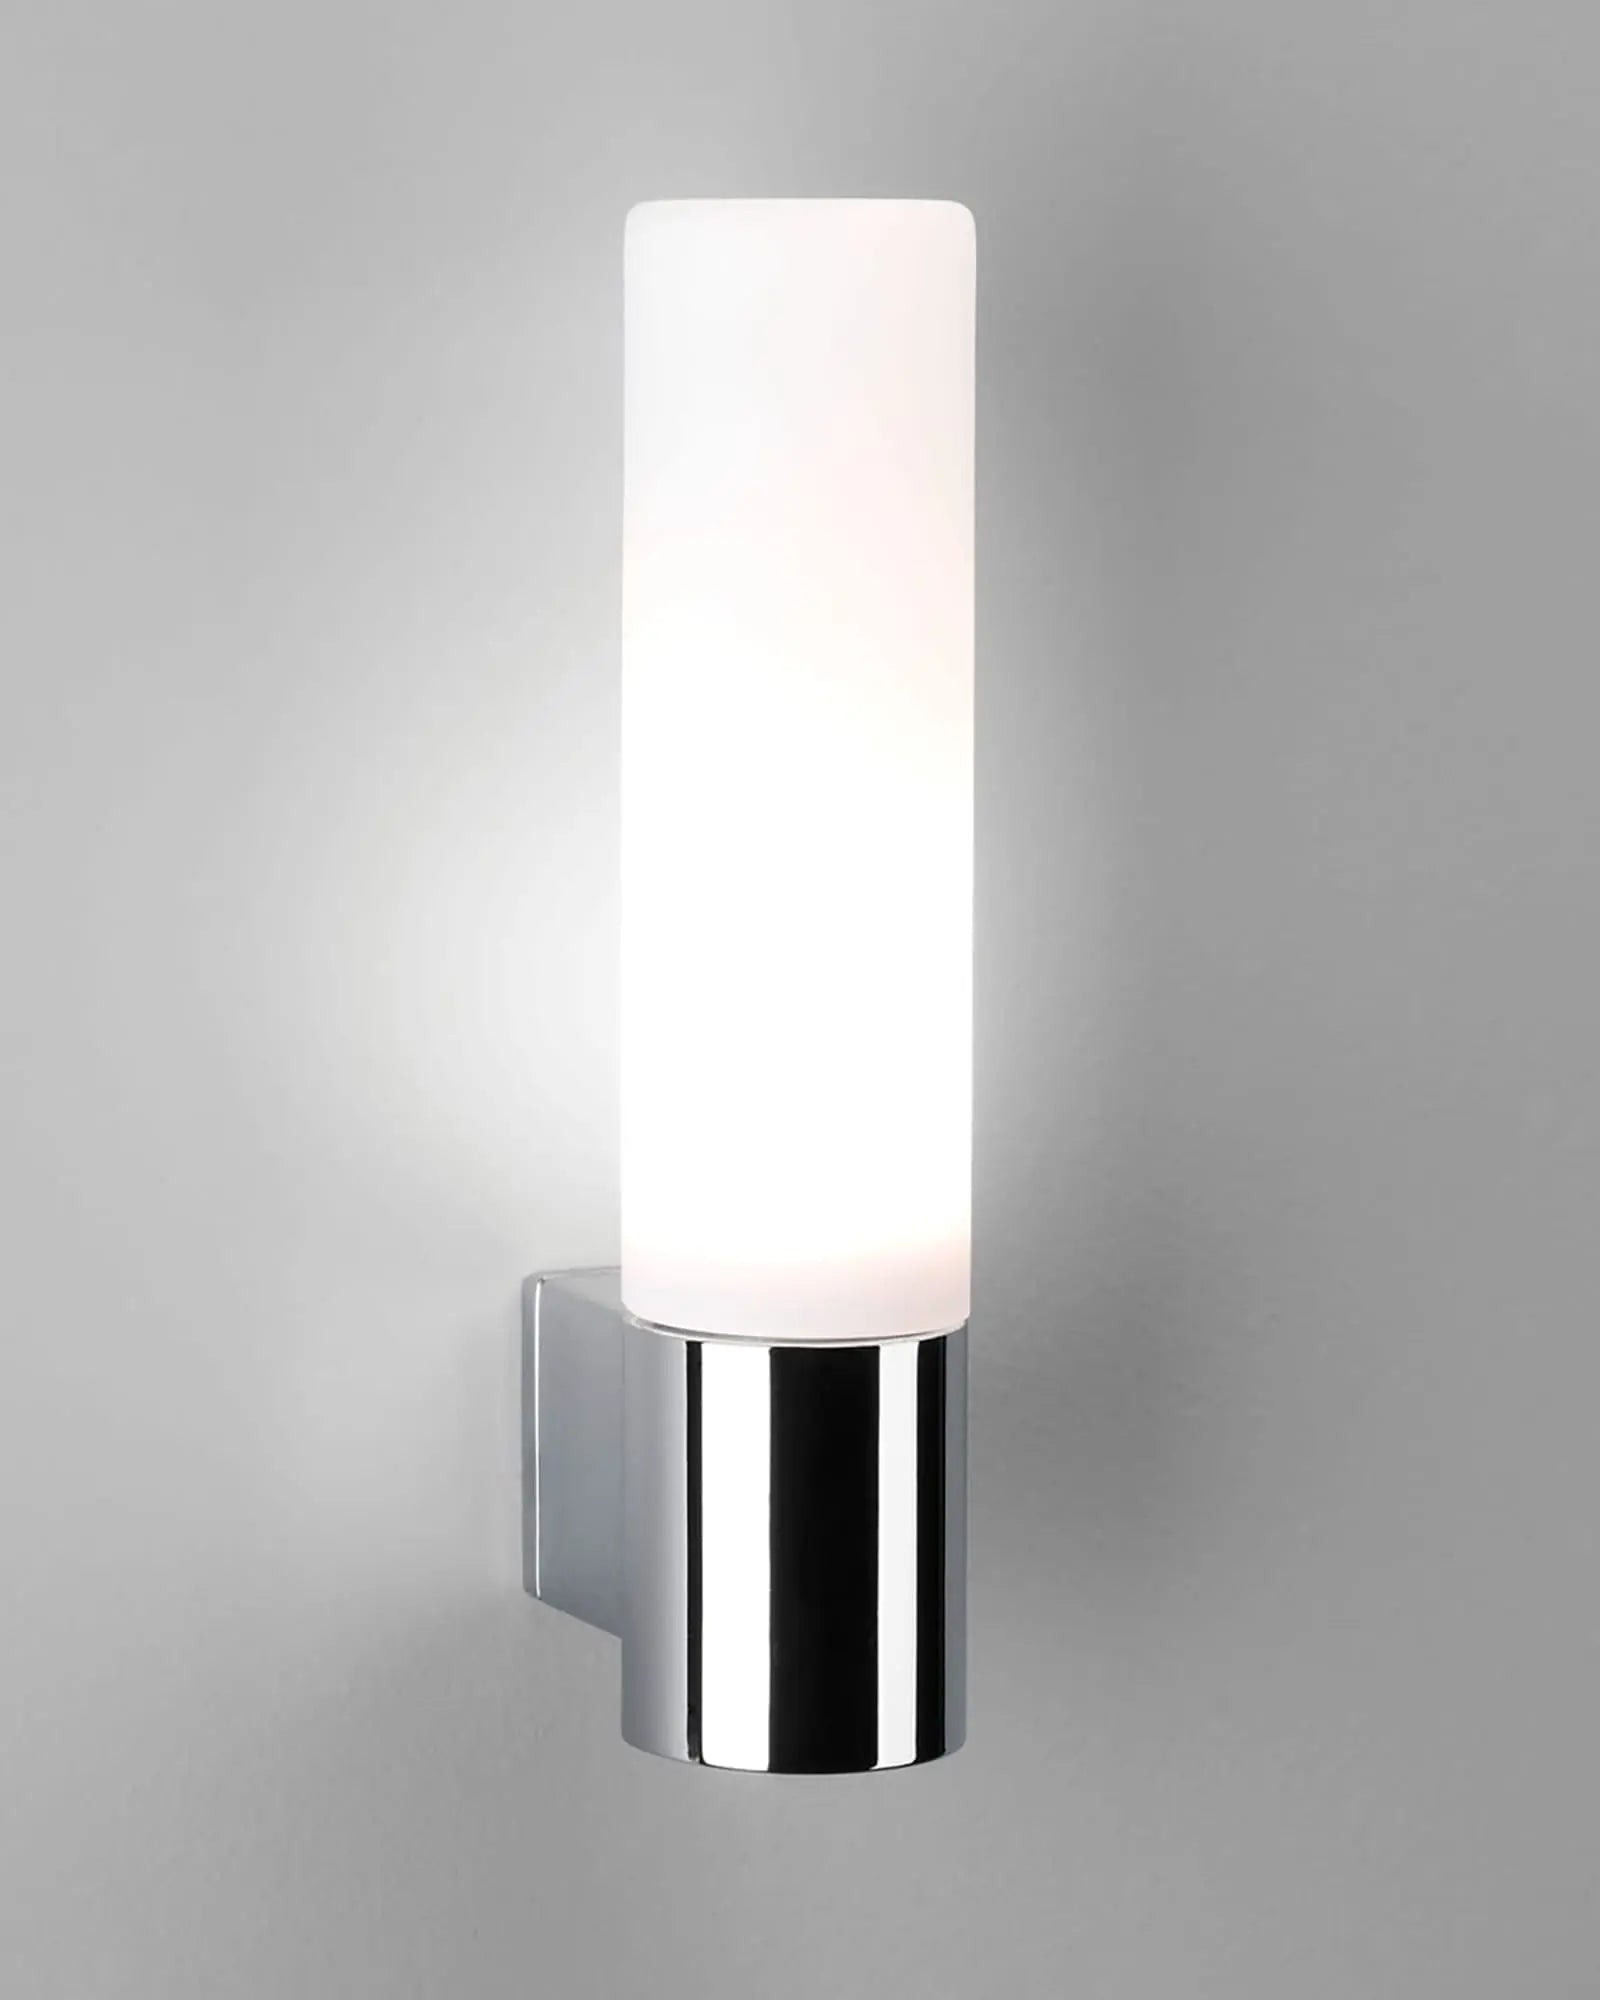 Bari contemporary lantern style bathroom wall lamp chrome